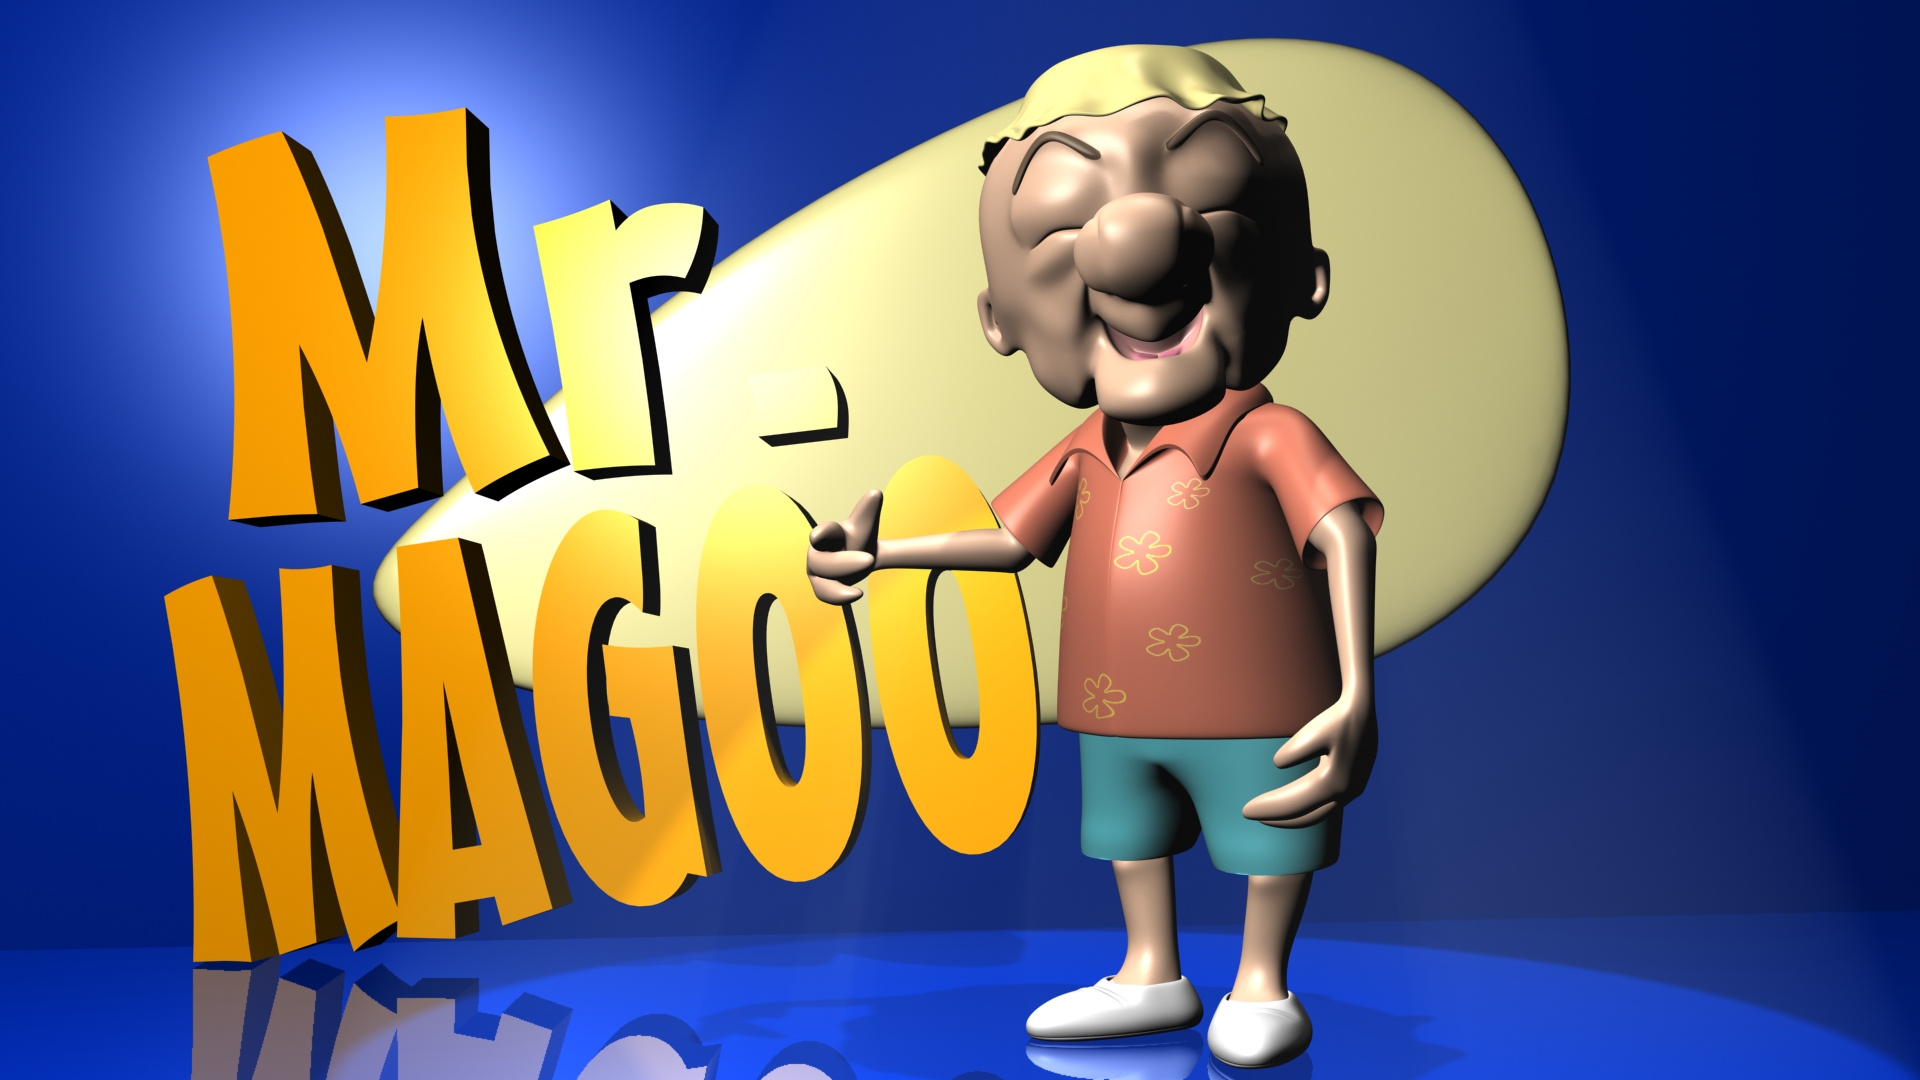 TV Show Mr. Magoo HD Wallpaper Background Image.